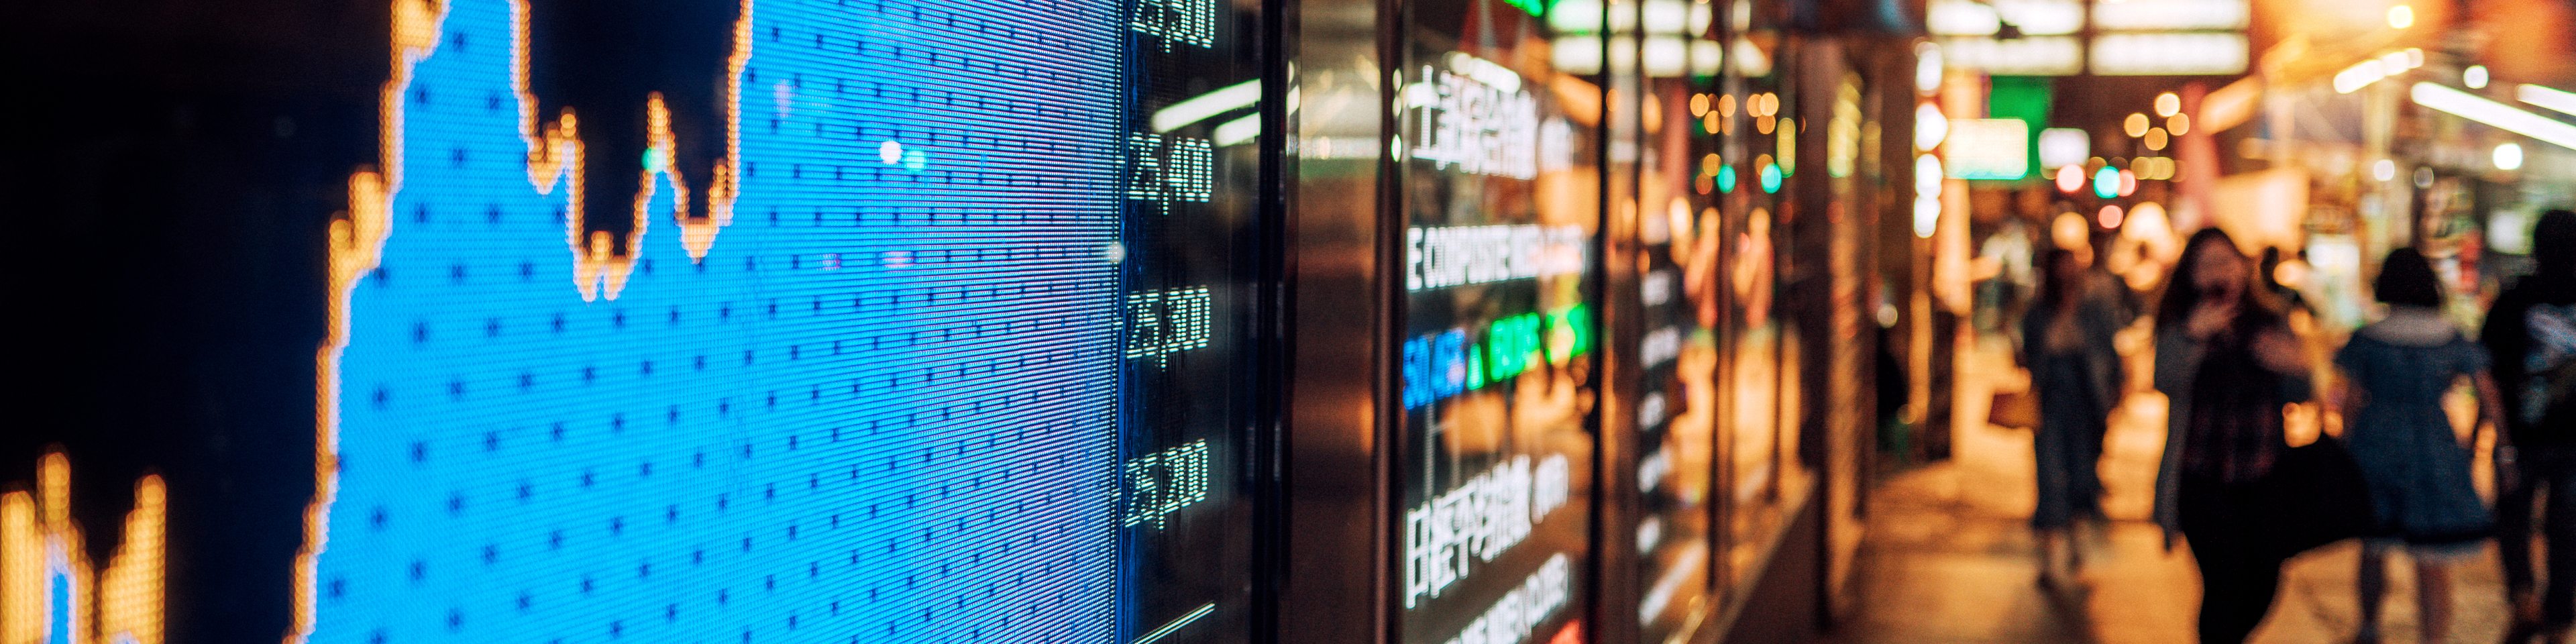 Financial stock exchange market display screen board on the street